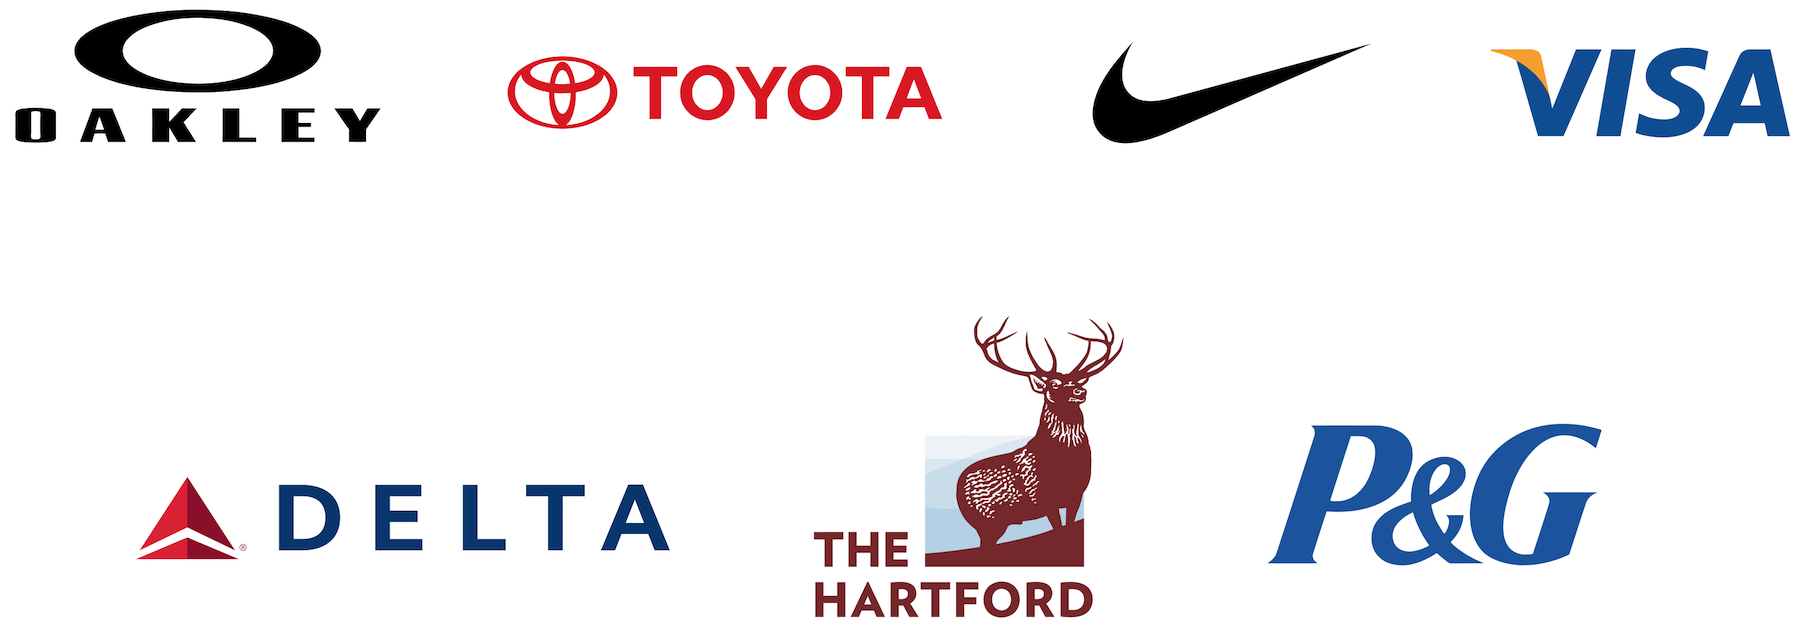 Oakley, Toyota, Nike, Visa, Delta, The Hartford, and Proctor & Gamble